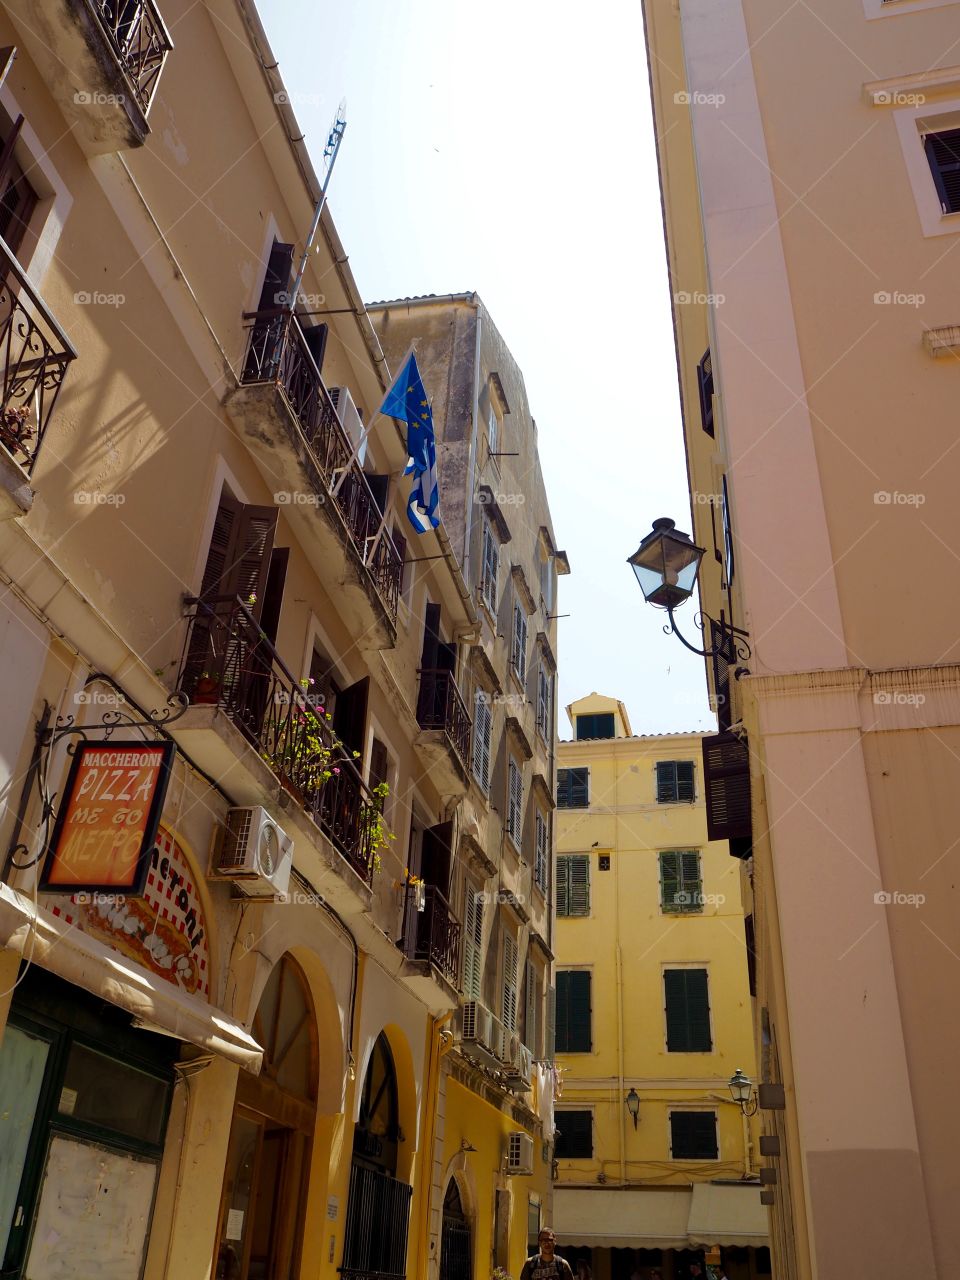 Buildings and street views in Corfu Town, Greece